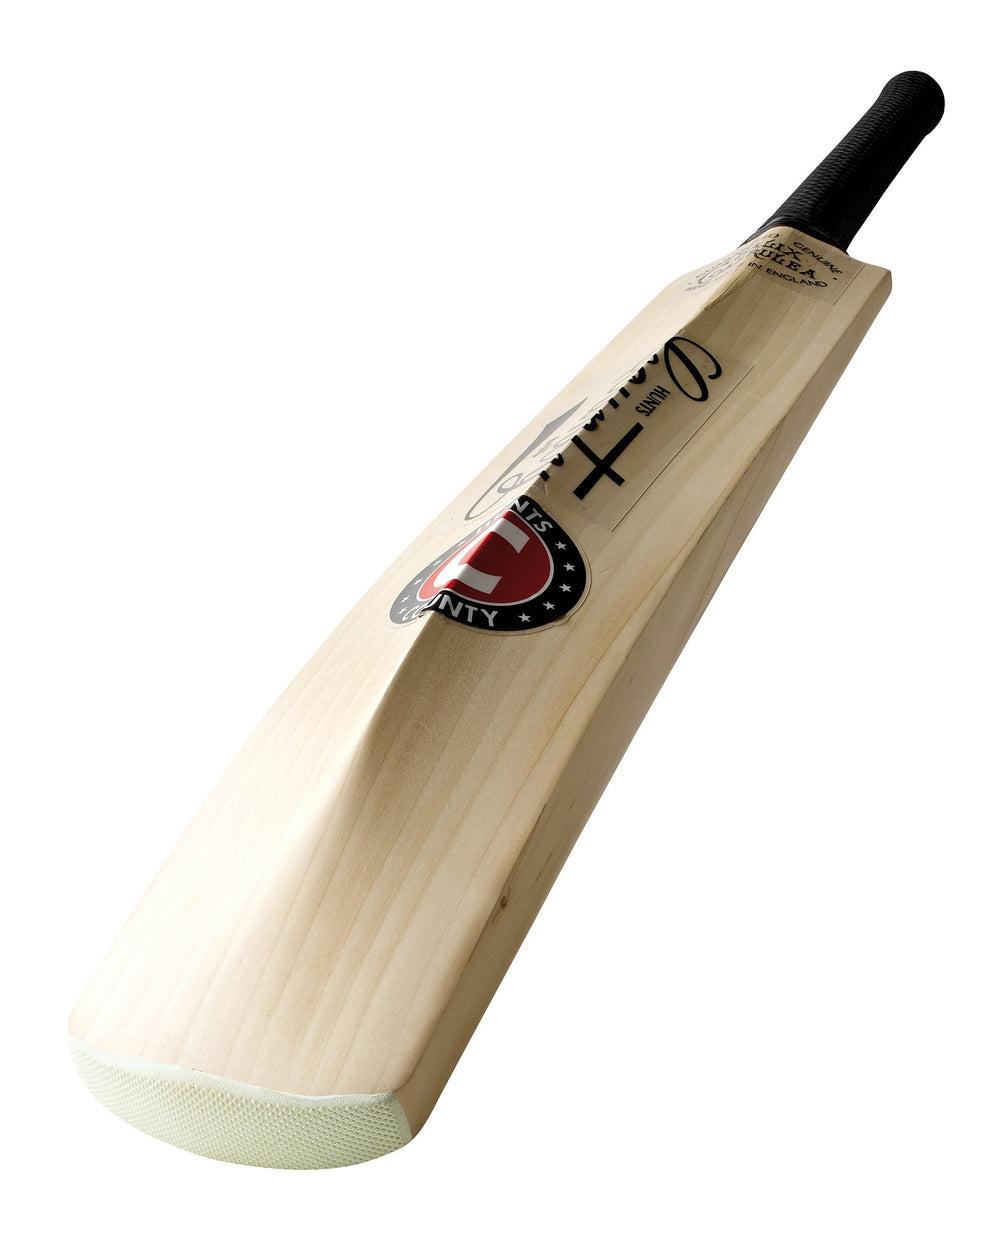 Hunts County Caerulex Special Cricket Bat